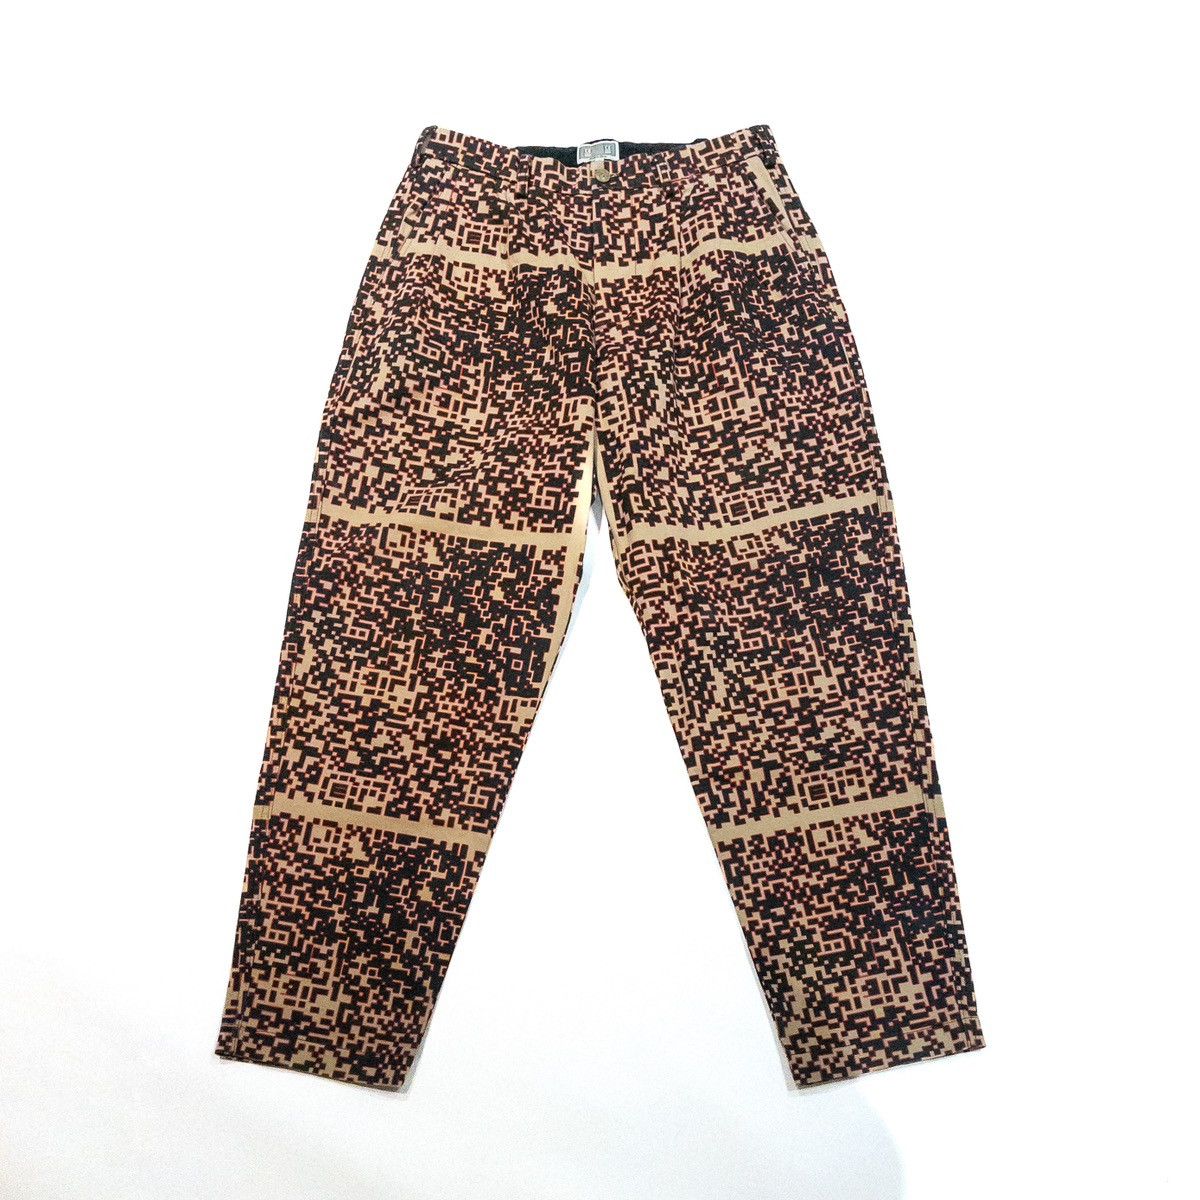 image of Cav Empt Red Khaki Digital Camo Pants, Men's (Size 34)